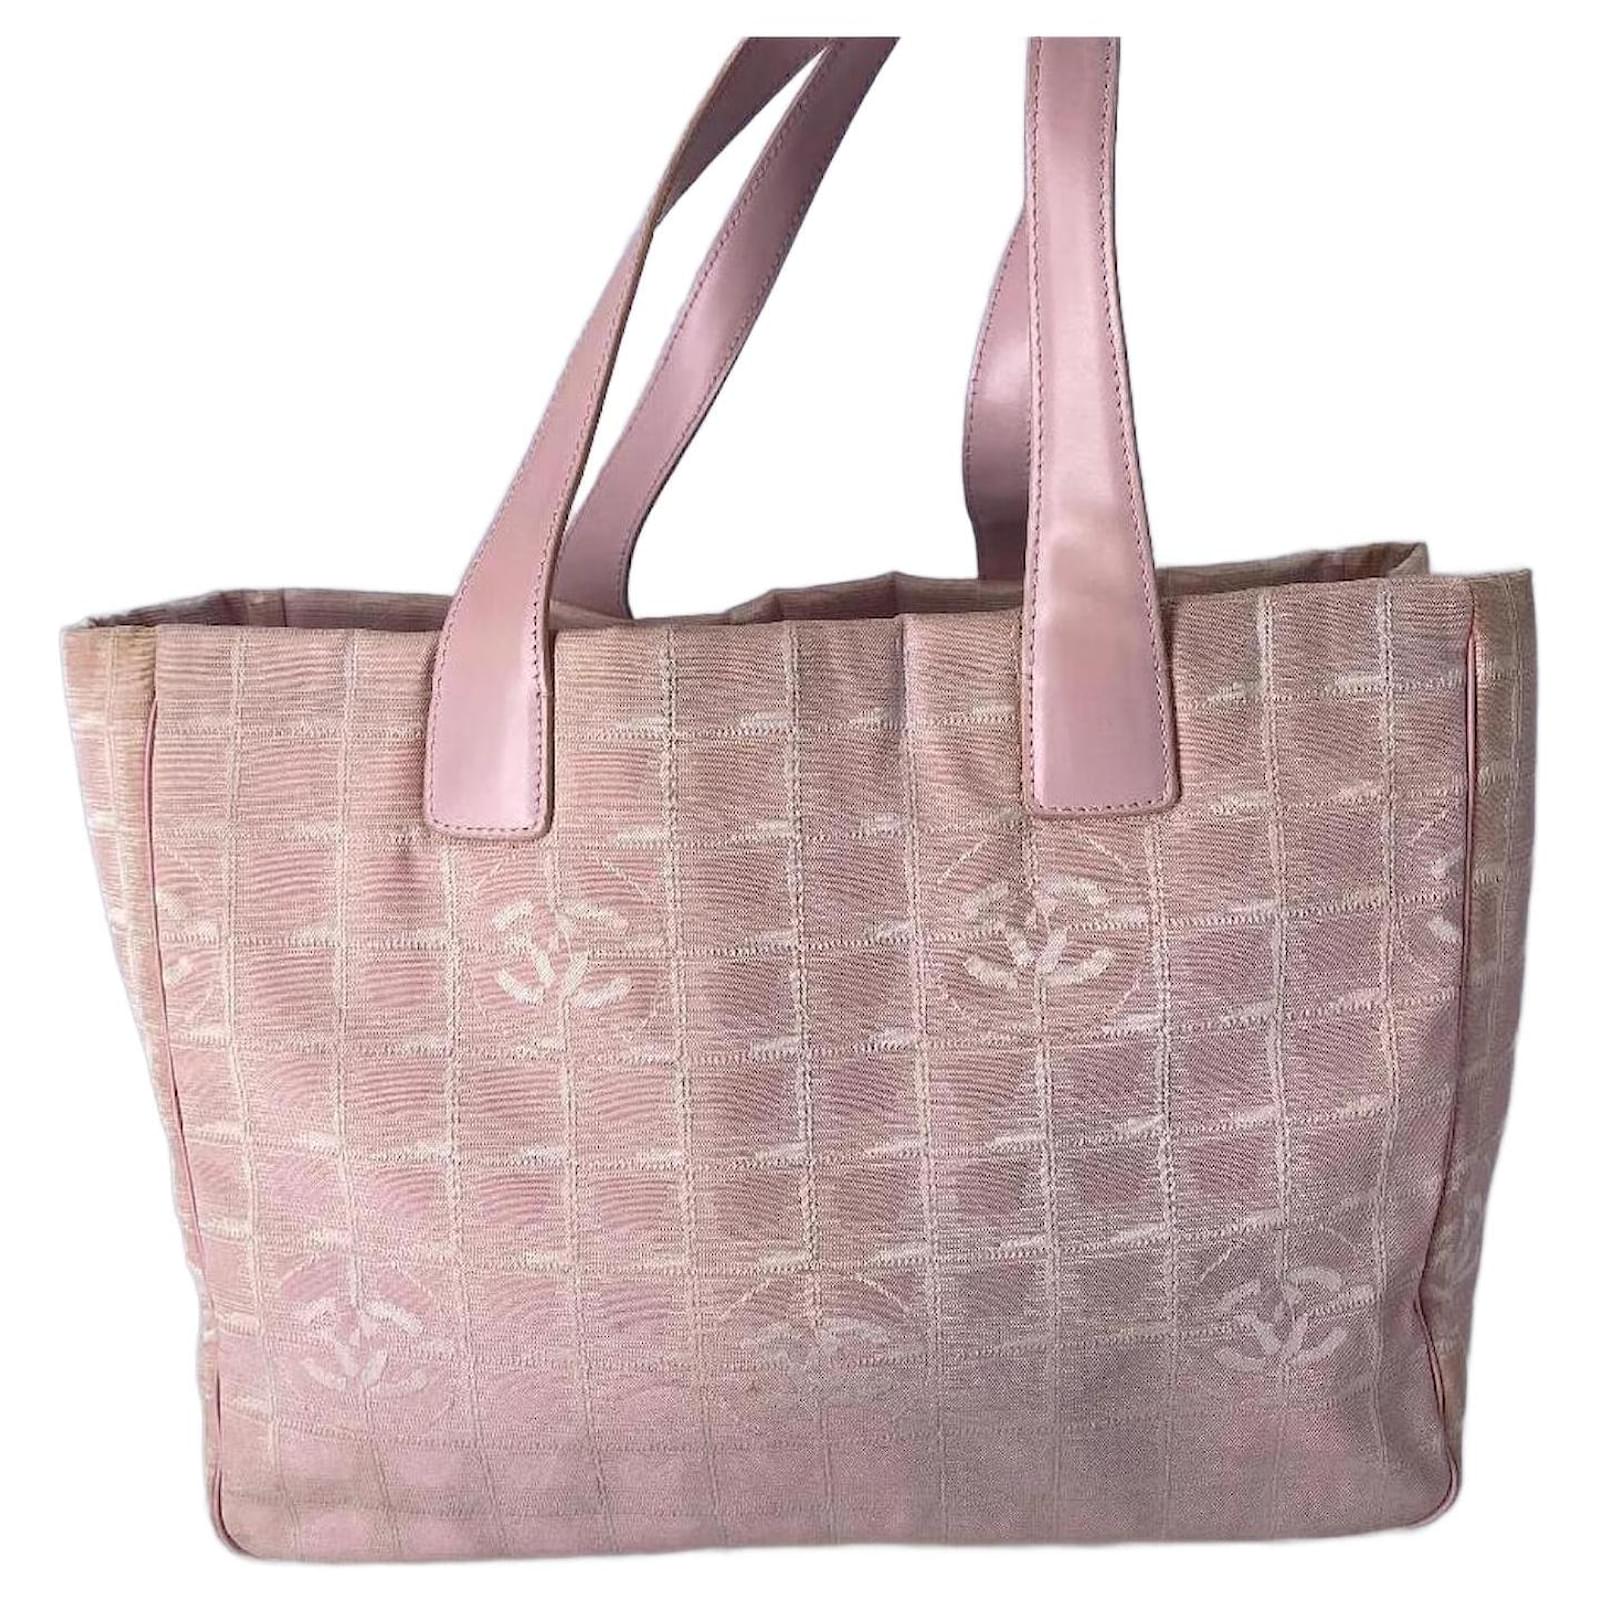 CHANEL, Bags, Chanel Pink Nylon Travel Line Tote Bag